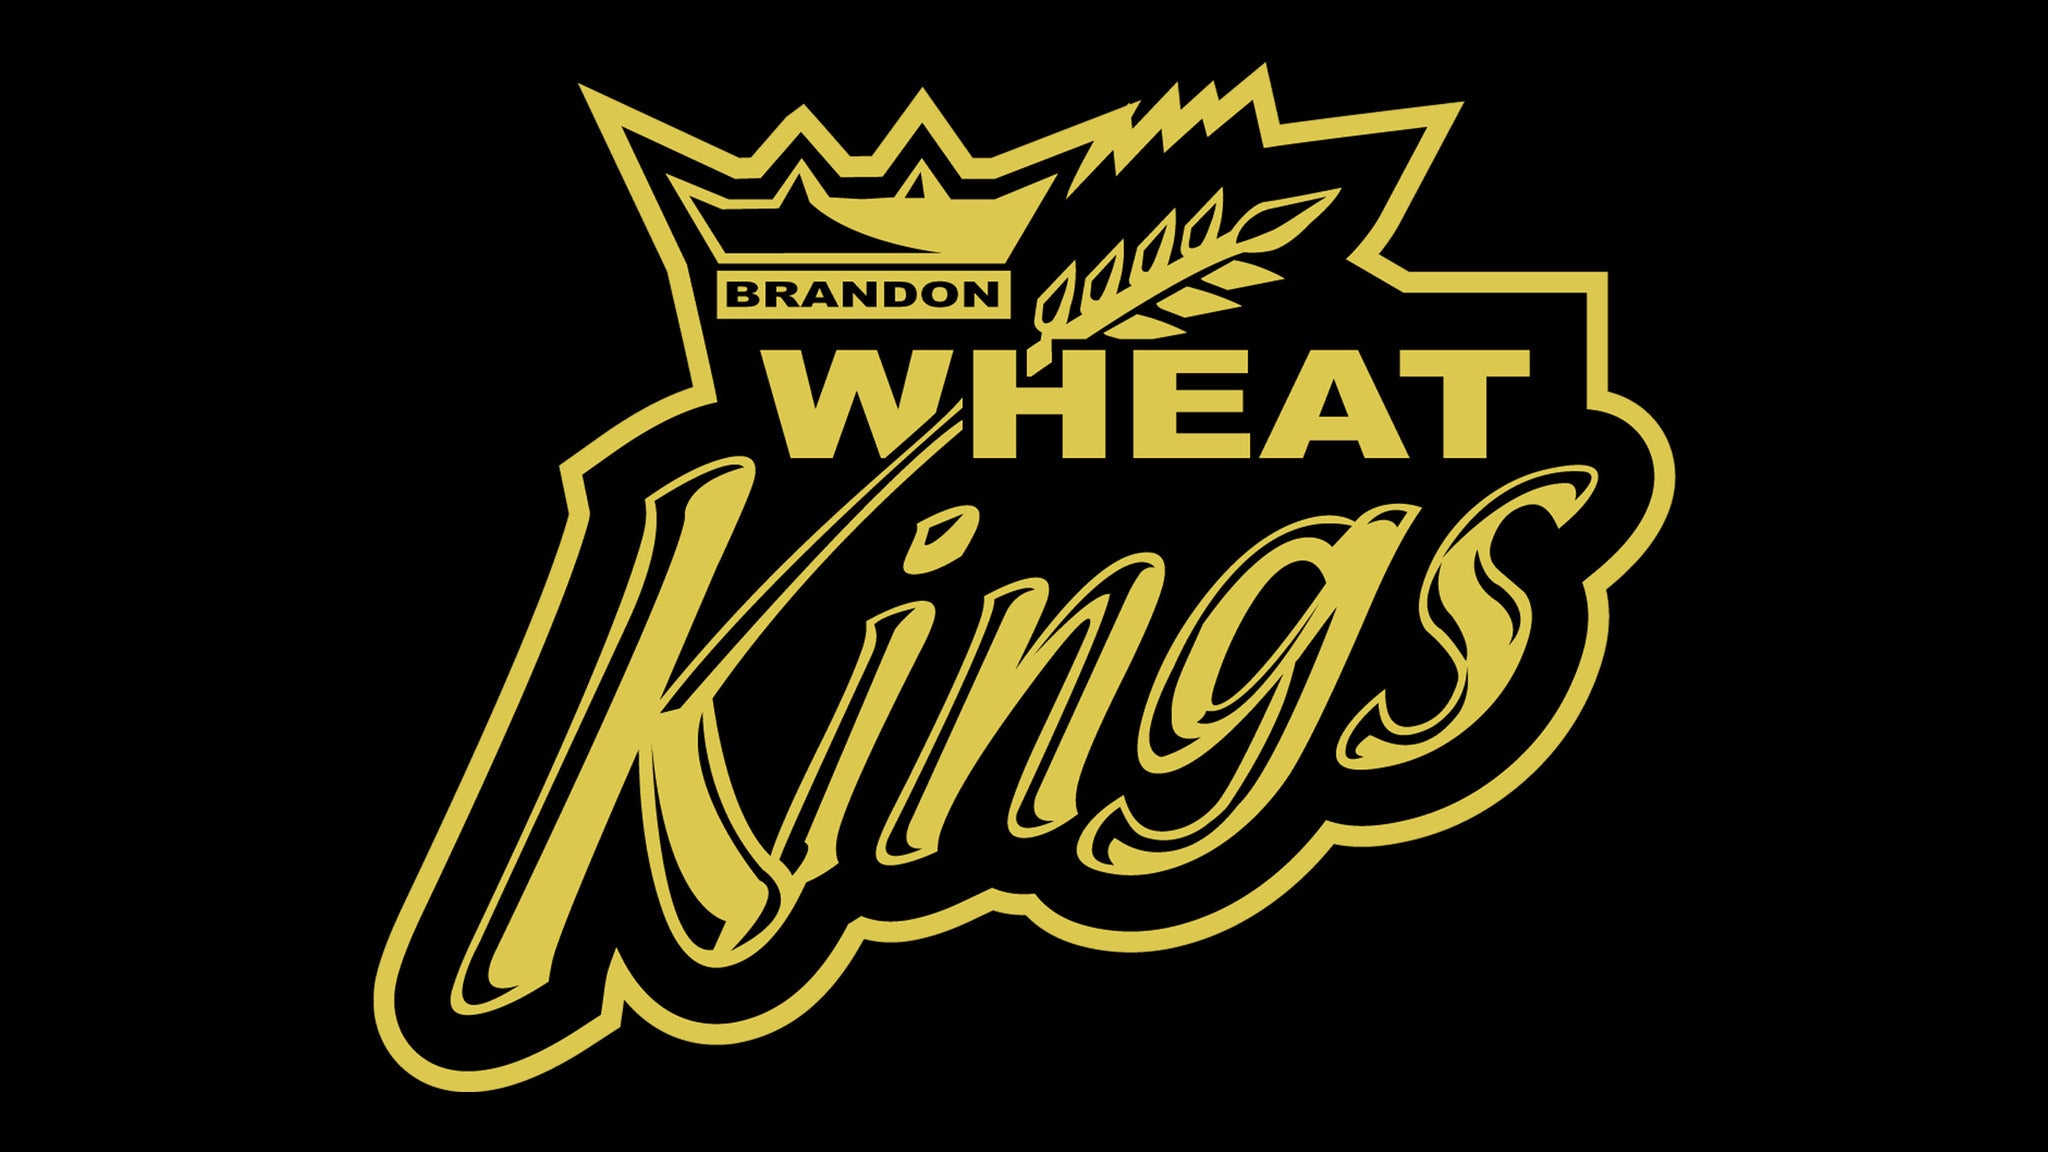 Brandon Wheat Kings vs. Medicine Hat Tigers in Brandon promo photo for Family 4 Pack presale offer code